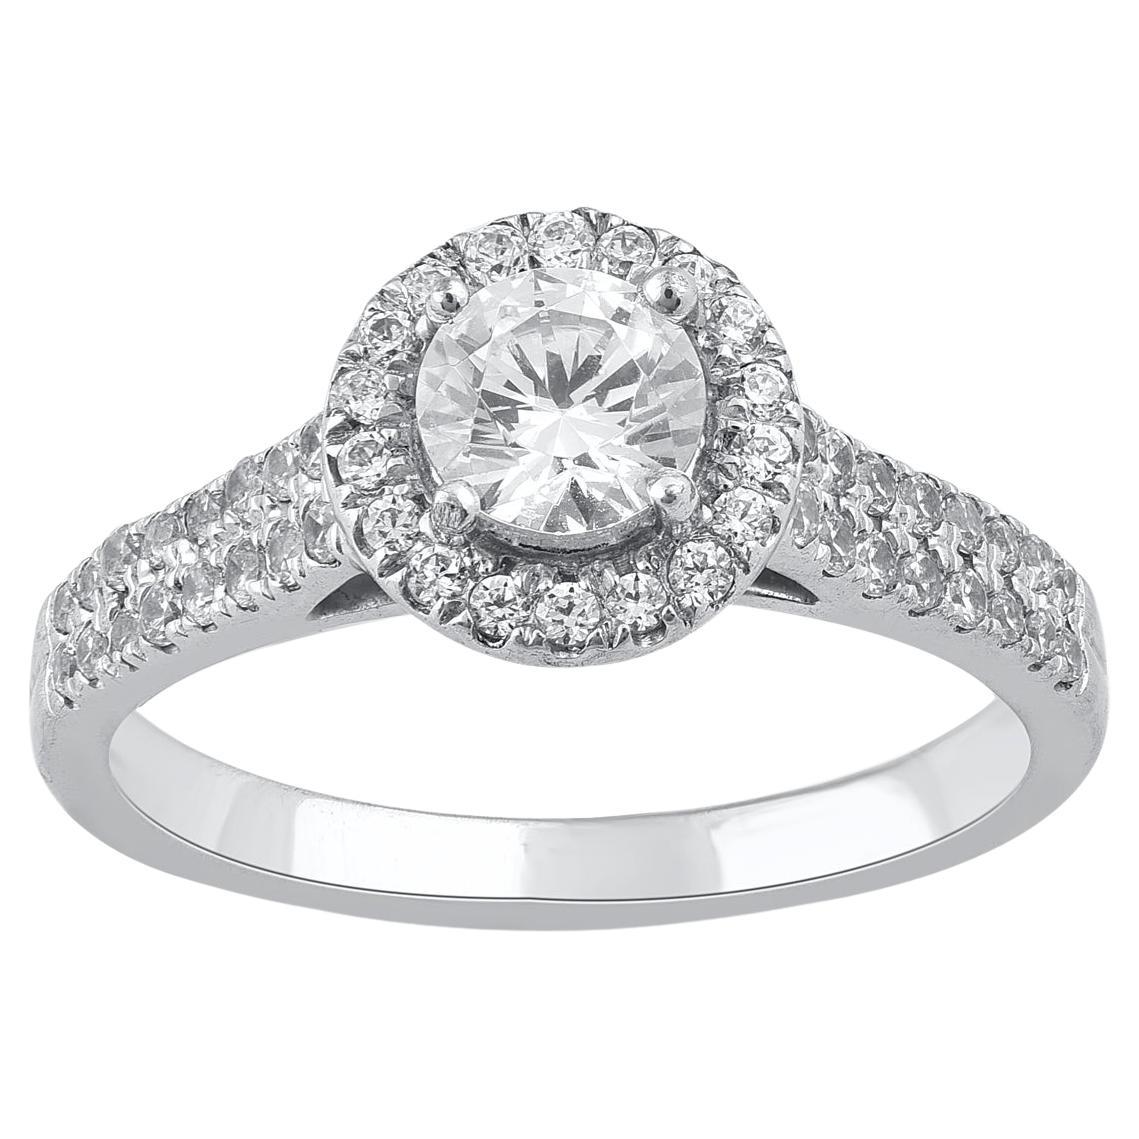 TJD 1.0 Carat Brilliant Cut Round Diamond 14KT White Gold Halo Engagement Ring